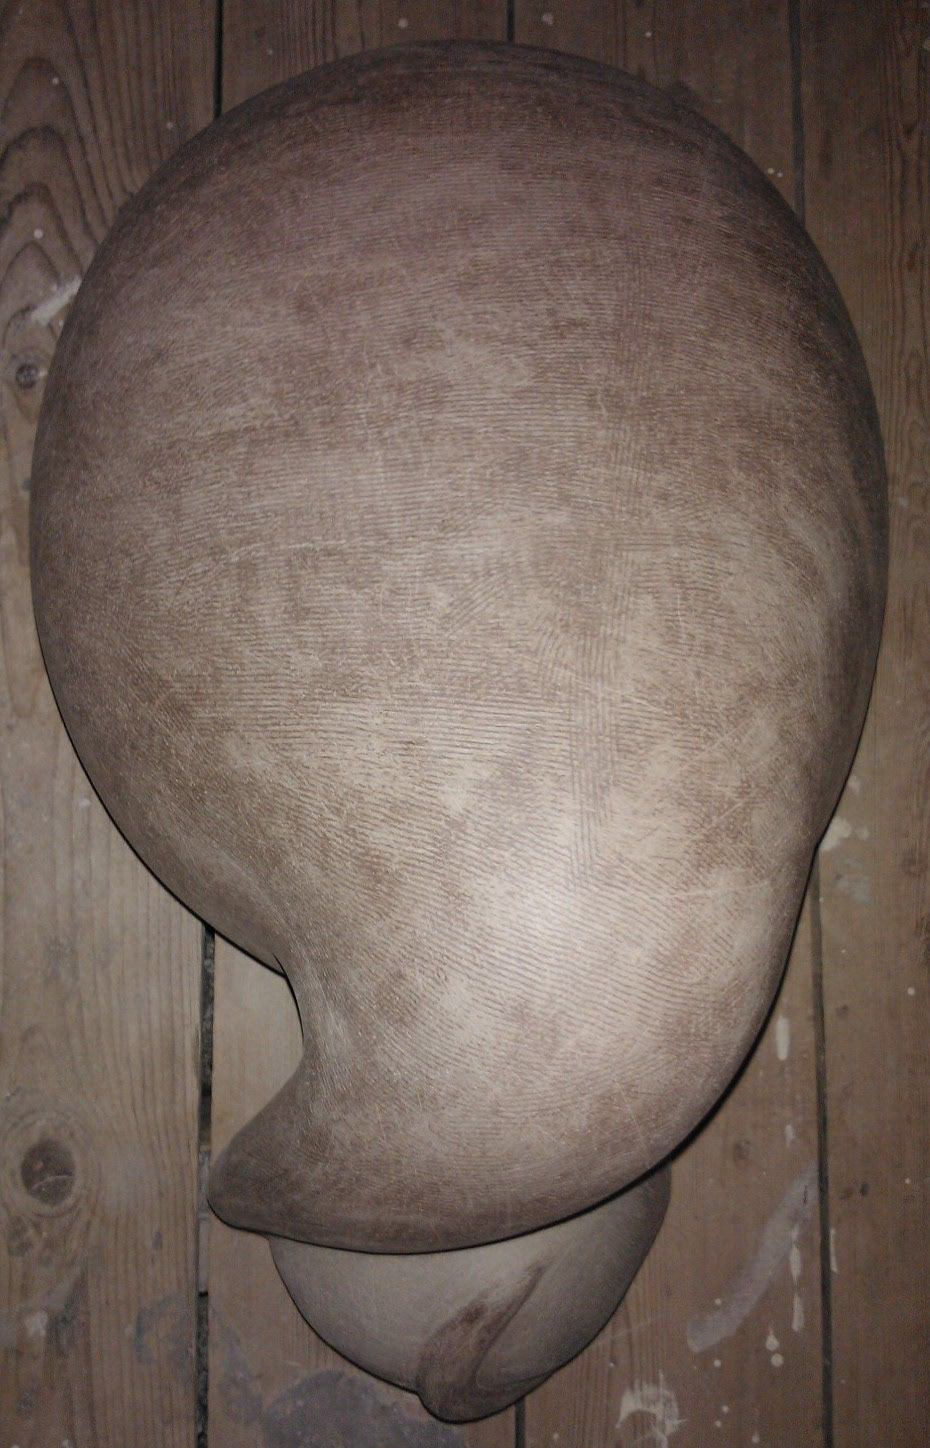 ceramics   Form  family   contemporary sculpture masters degree  graduate  oxides   Earthenware